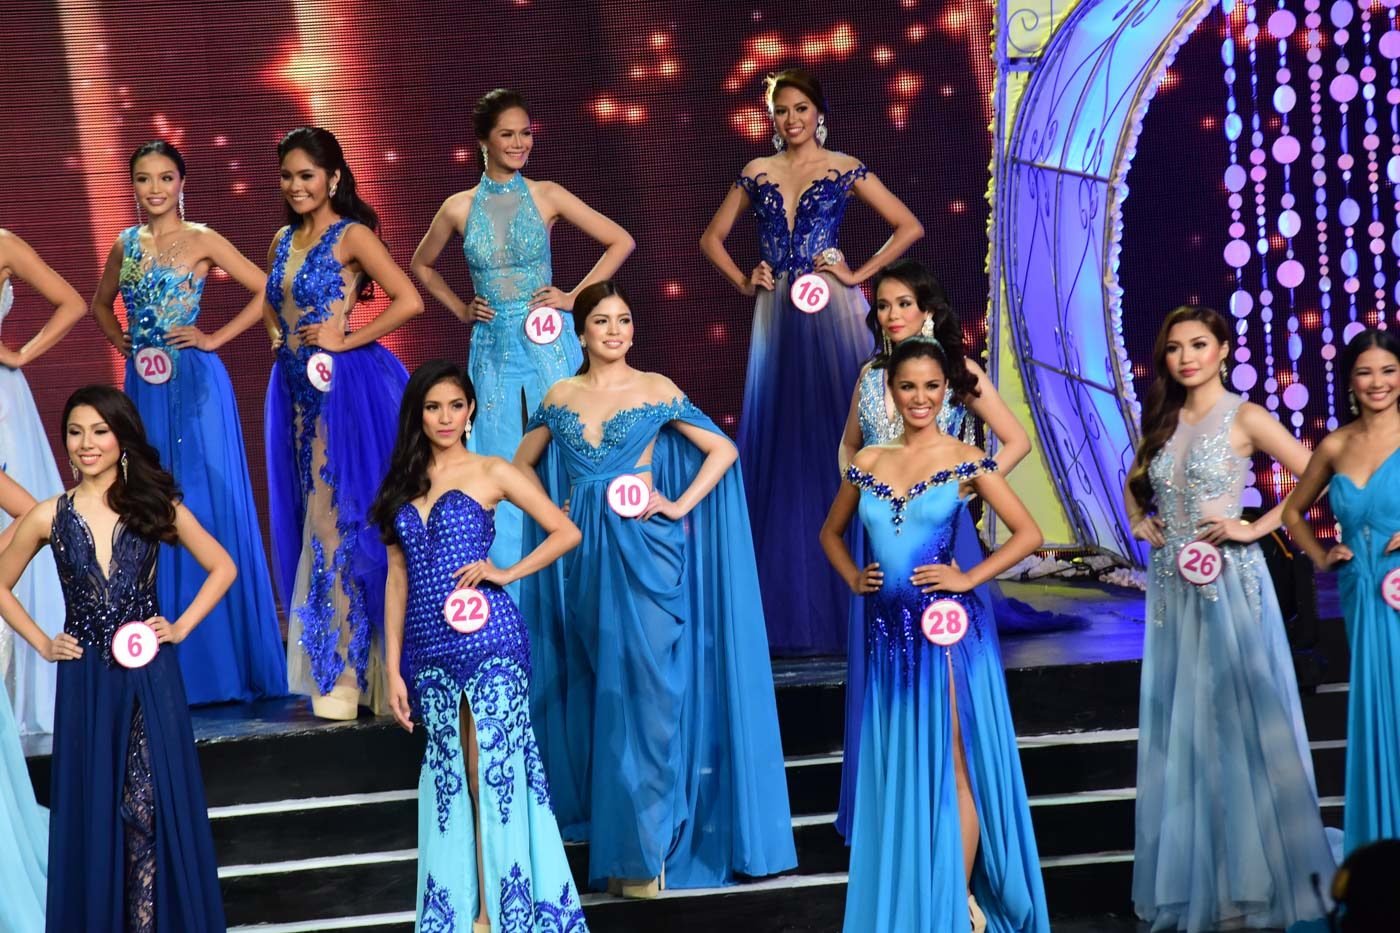 IN PHOTOS: Evening gown segment, Mutya ng Pilipinas 2017